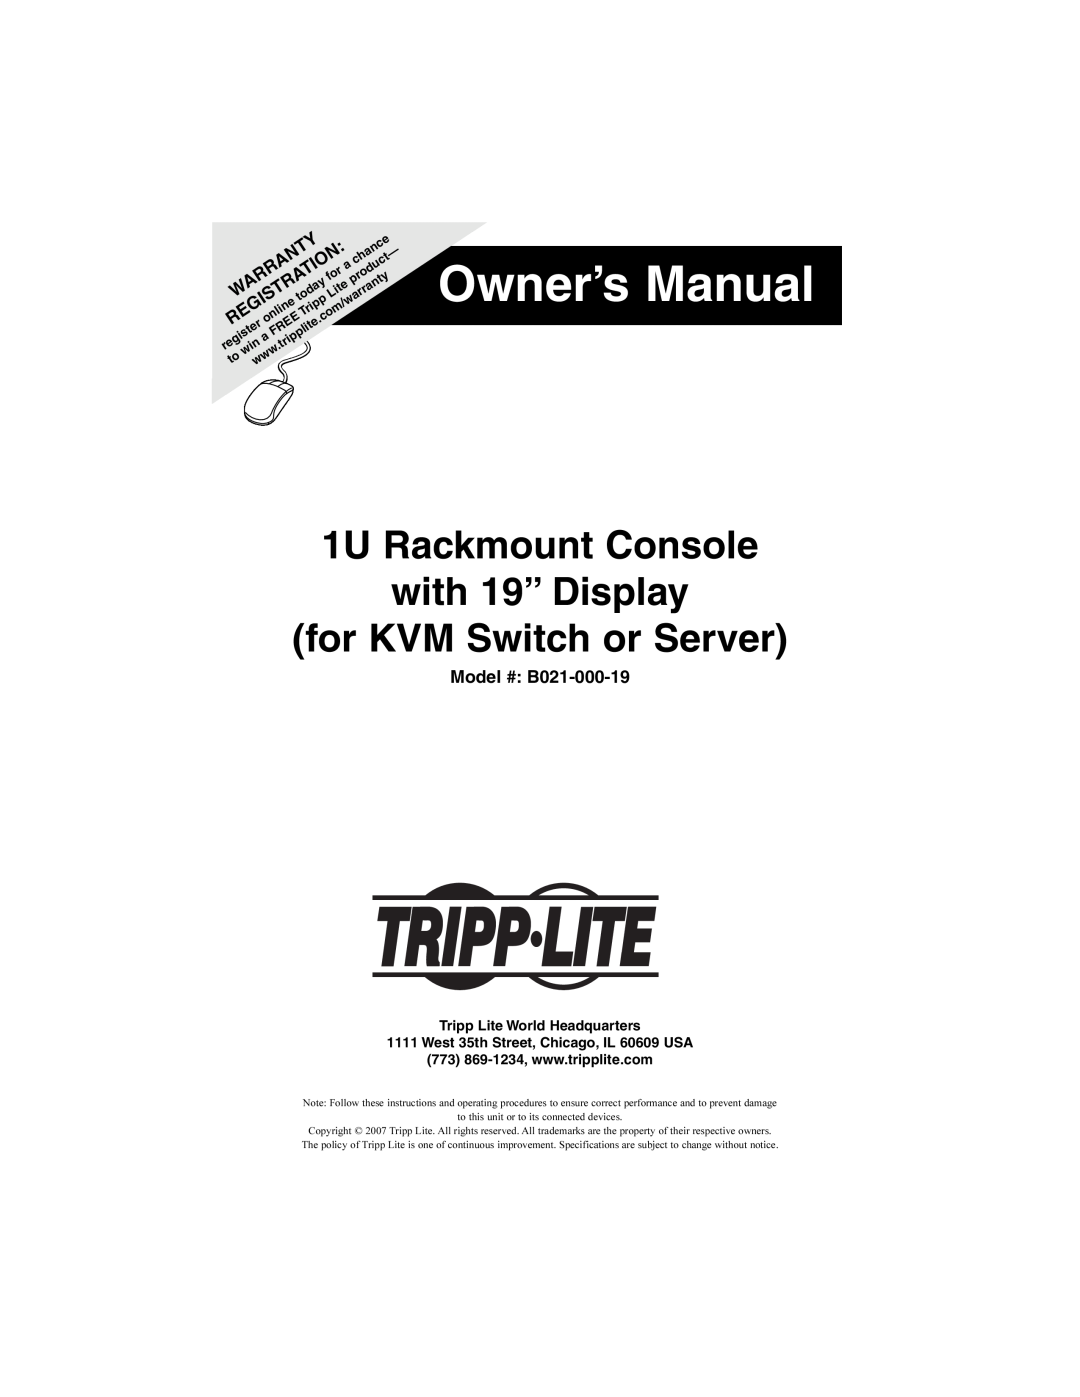 Tripp Lite owner manual Model # B021-000-19, Warranty, Tripp Lite World Headquarters, Owner’s Manual, Lite product 